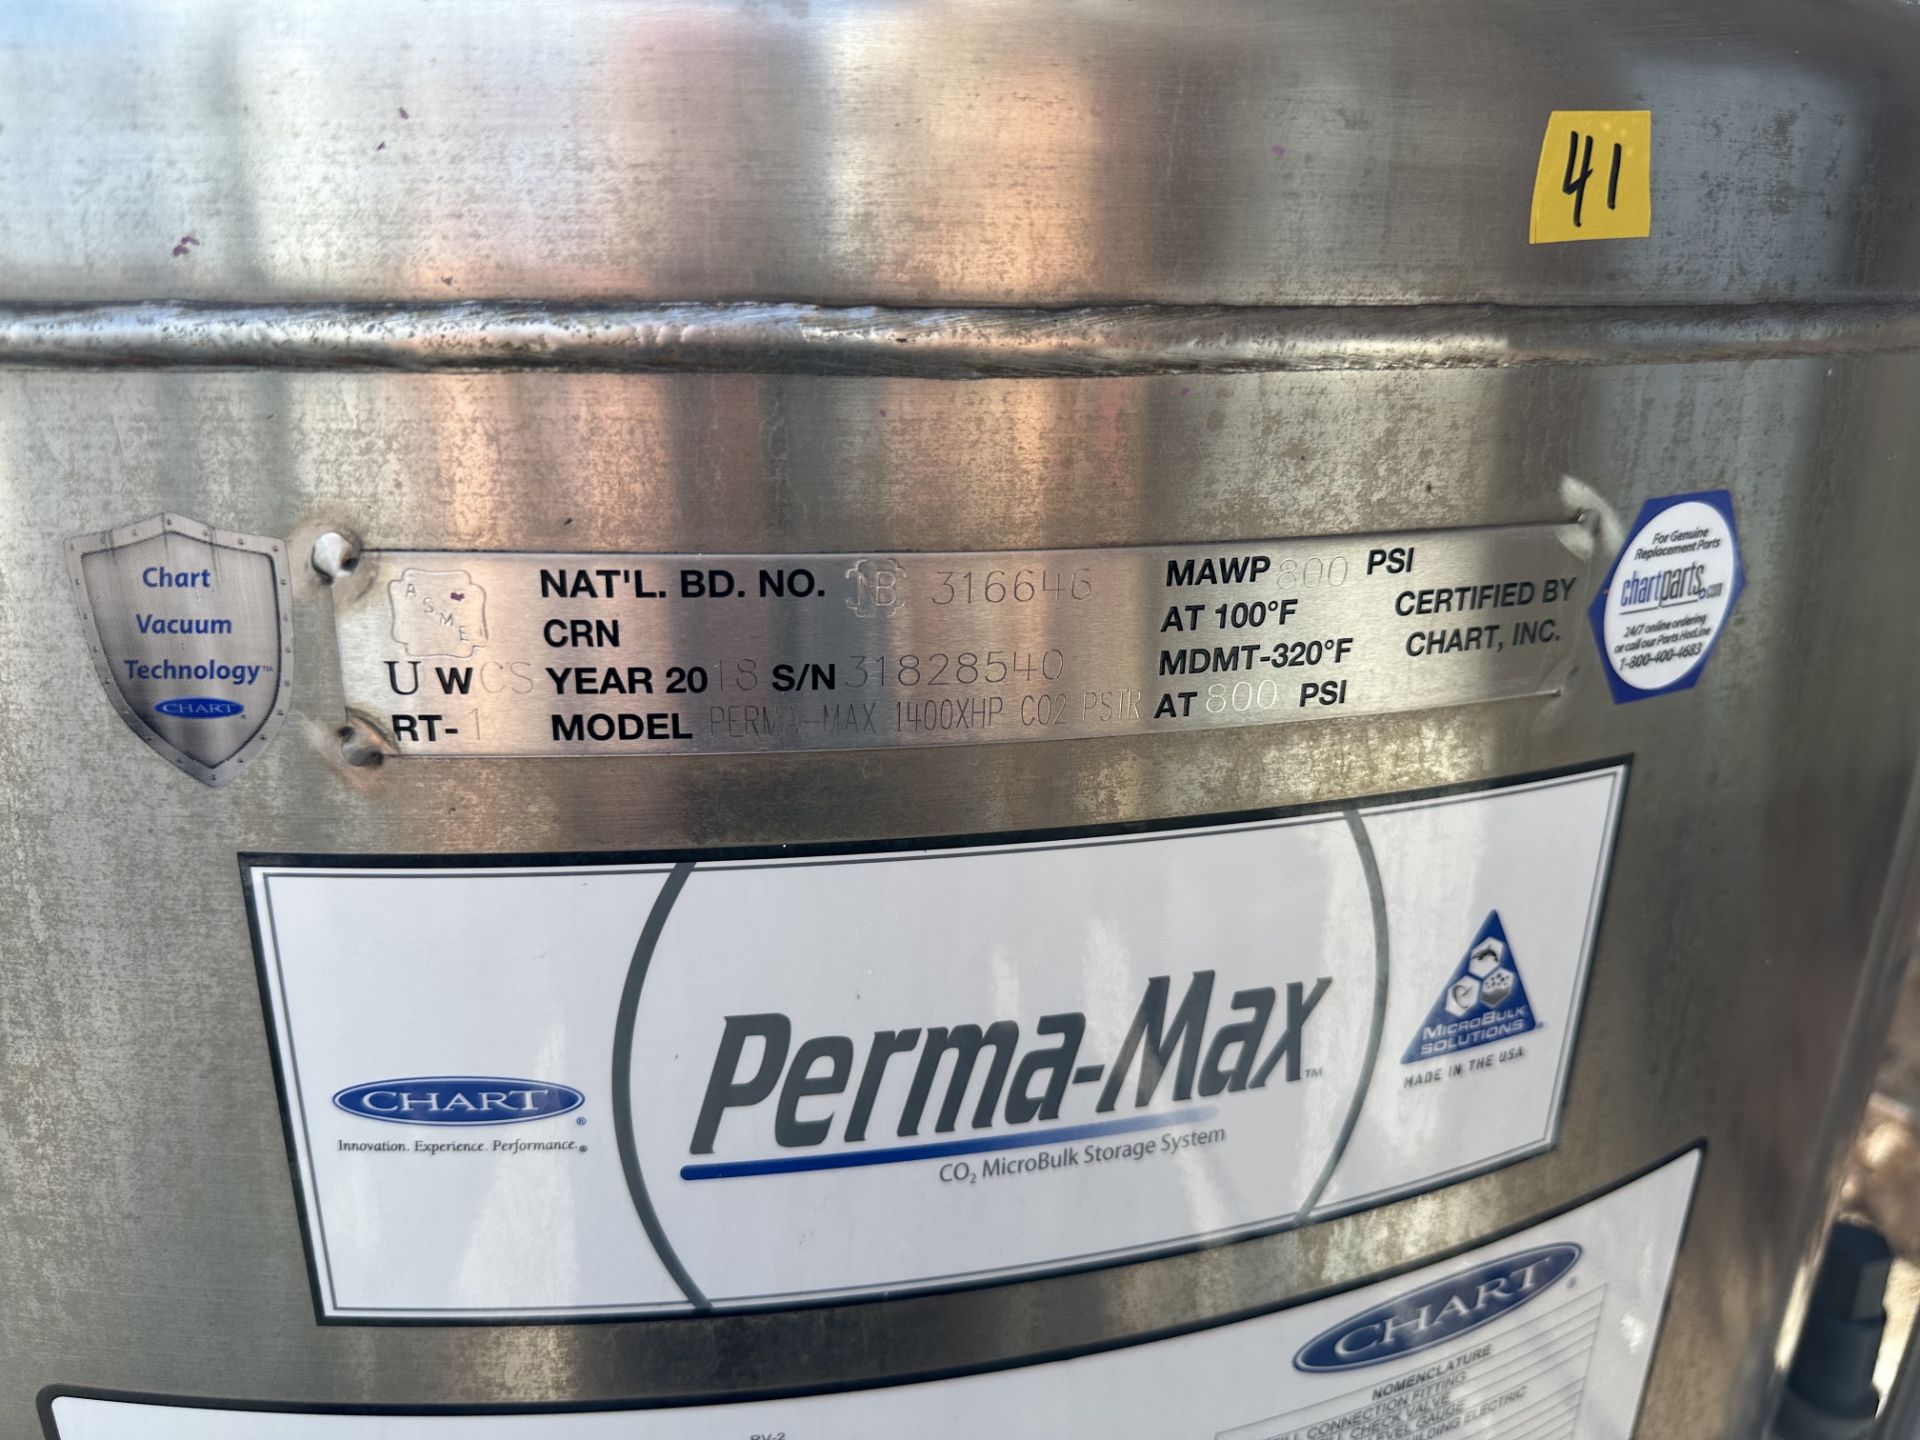 Used Perma-Max Extra High Pressure Microbulk Storage for CO2. Model Perma-Max 1400XHP CO2 PSTR - Bild 3 aus 14